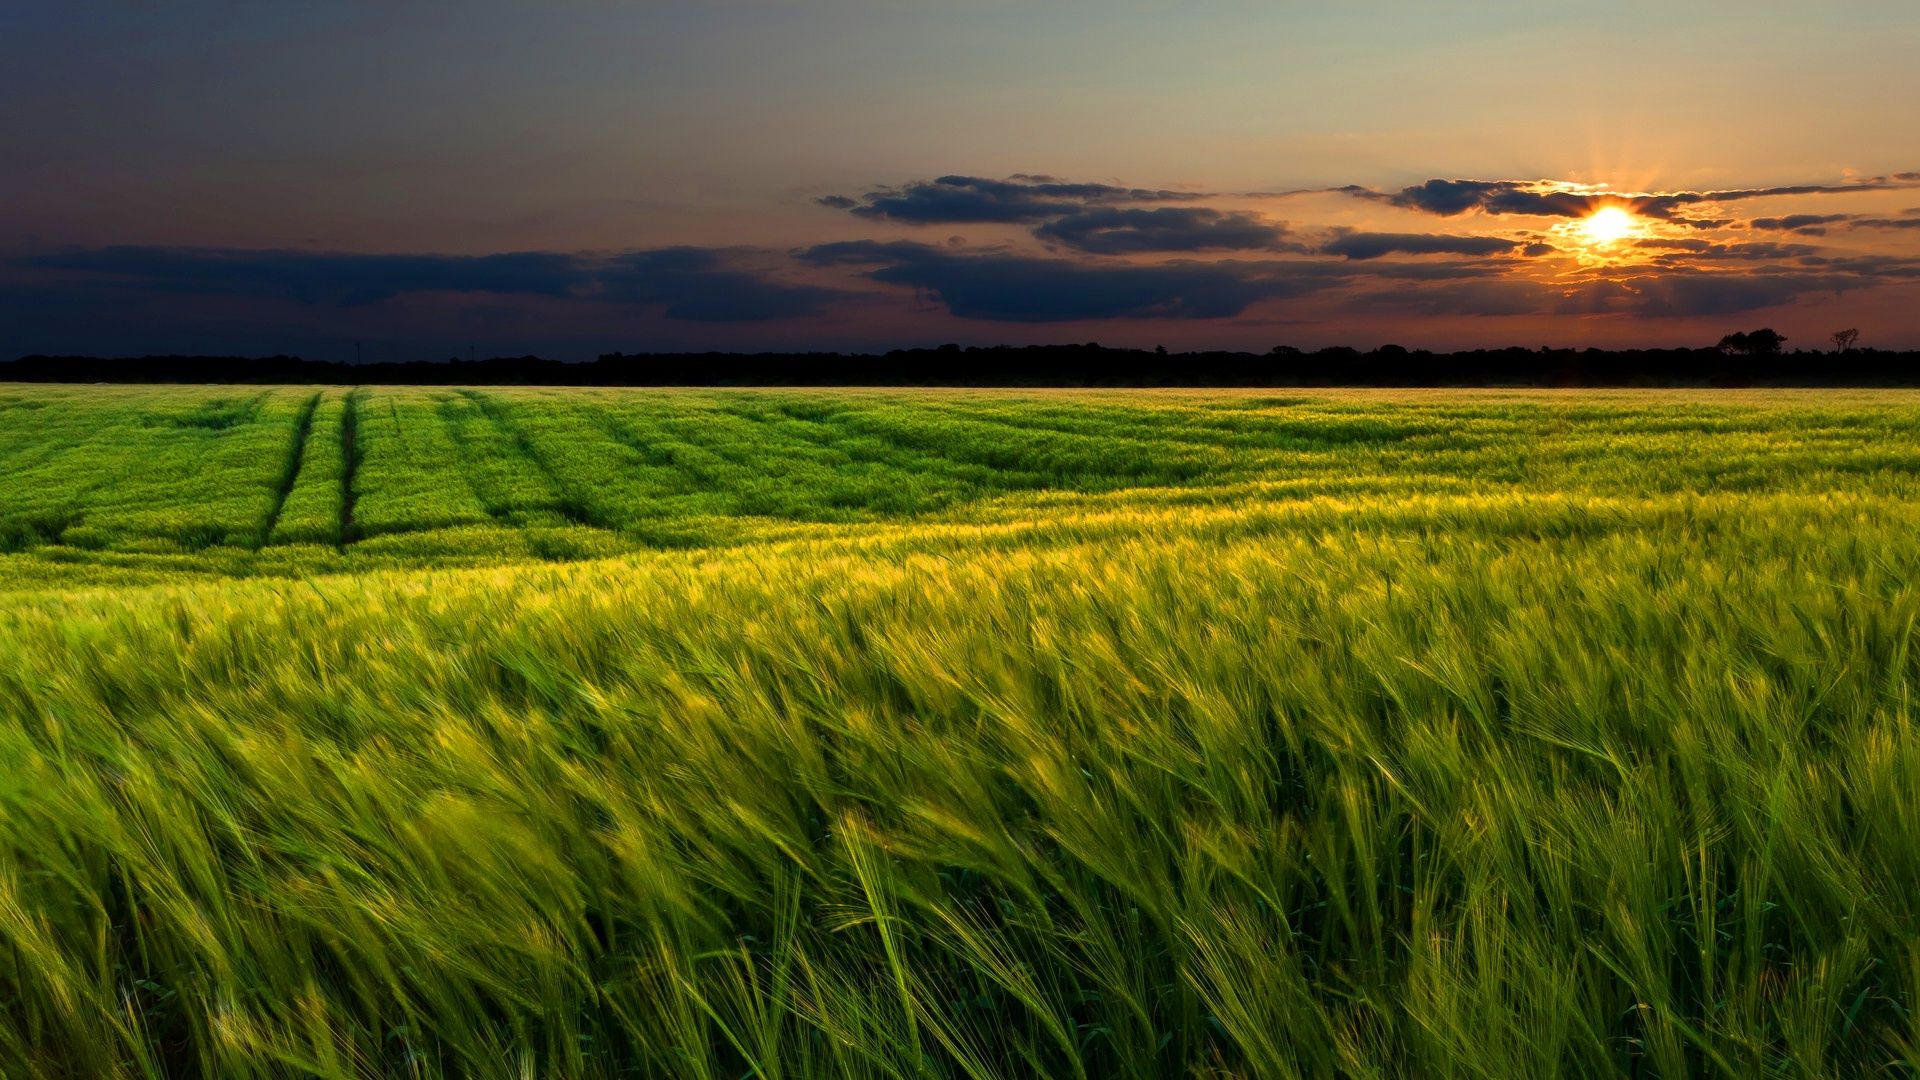 Description: The Wallpaper above is Green wheat field sunset